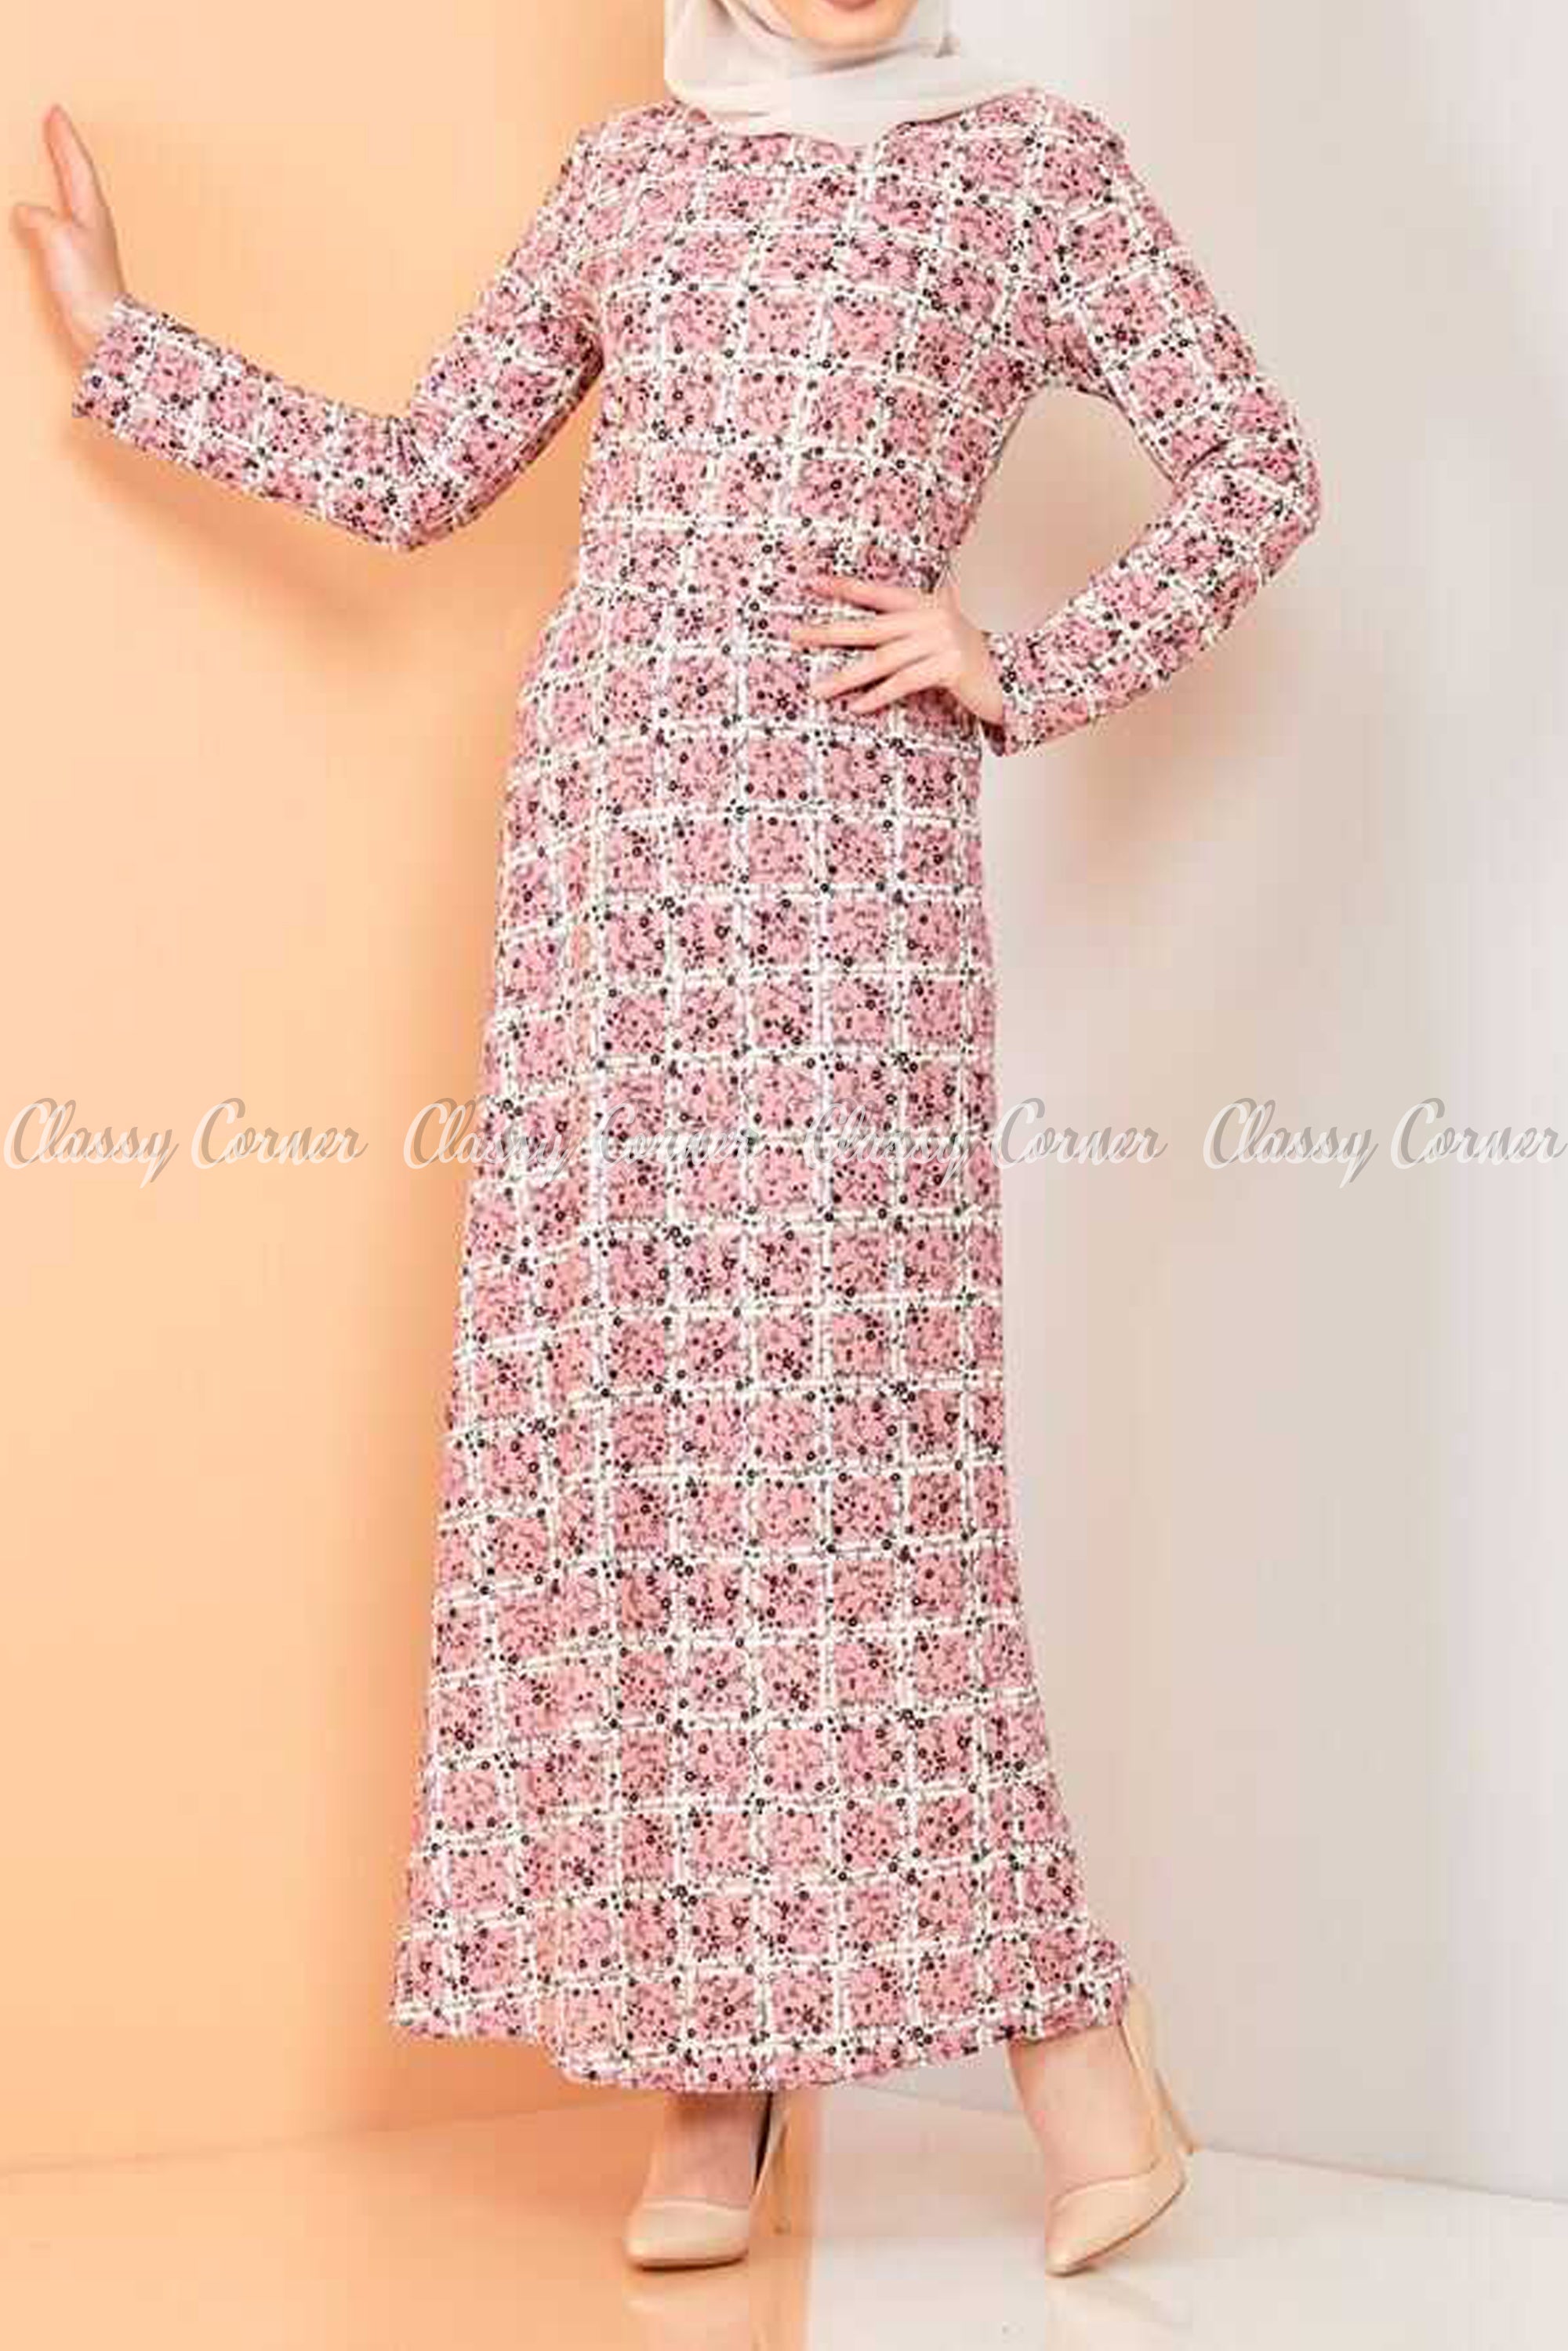 Plaid Pattern Powder Pink Modest Long Dress